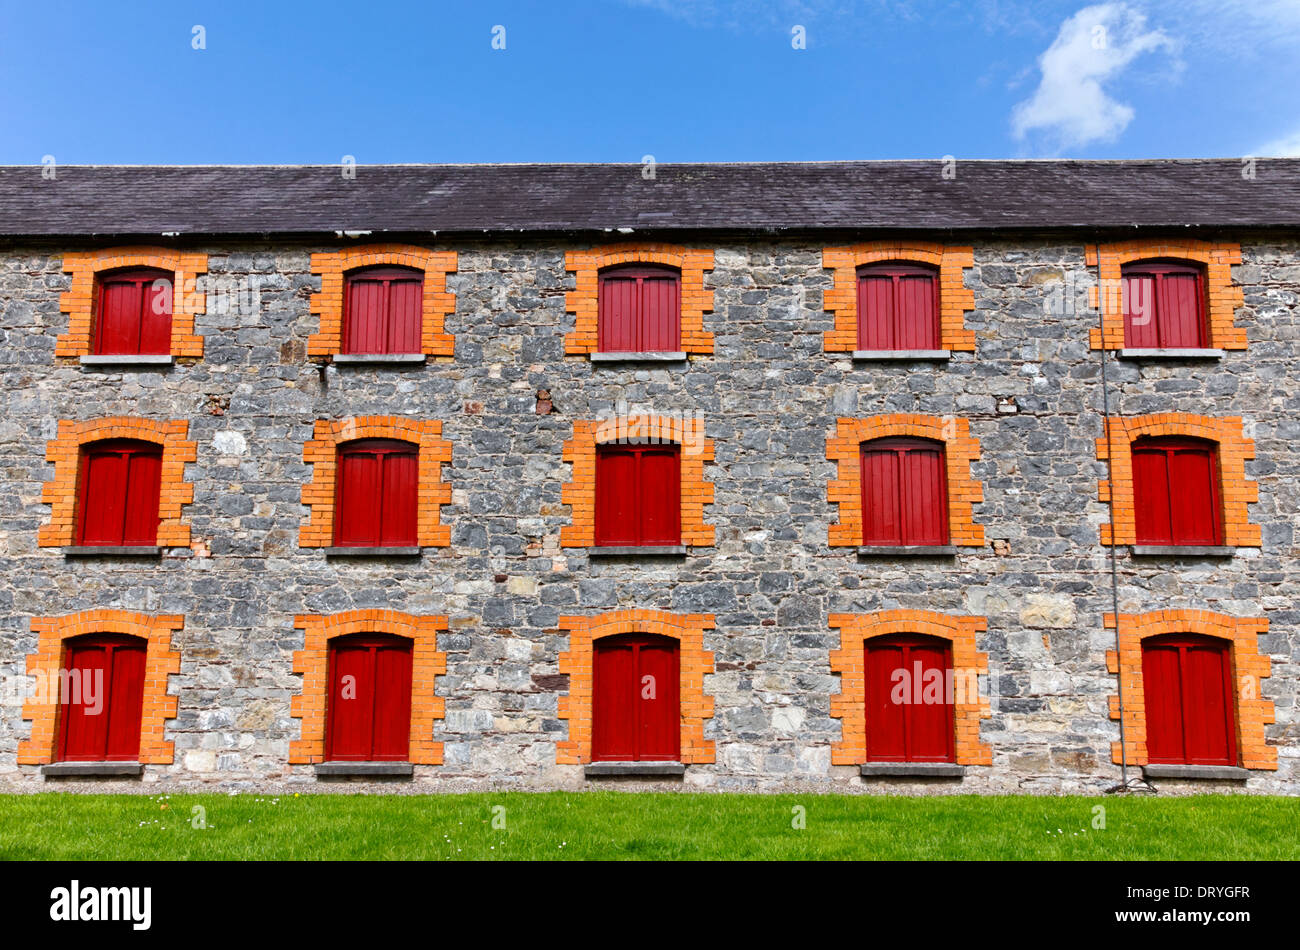 The Midleton Distillary in Midleton, County Cork, Ireland Stock Photo